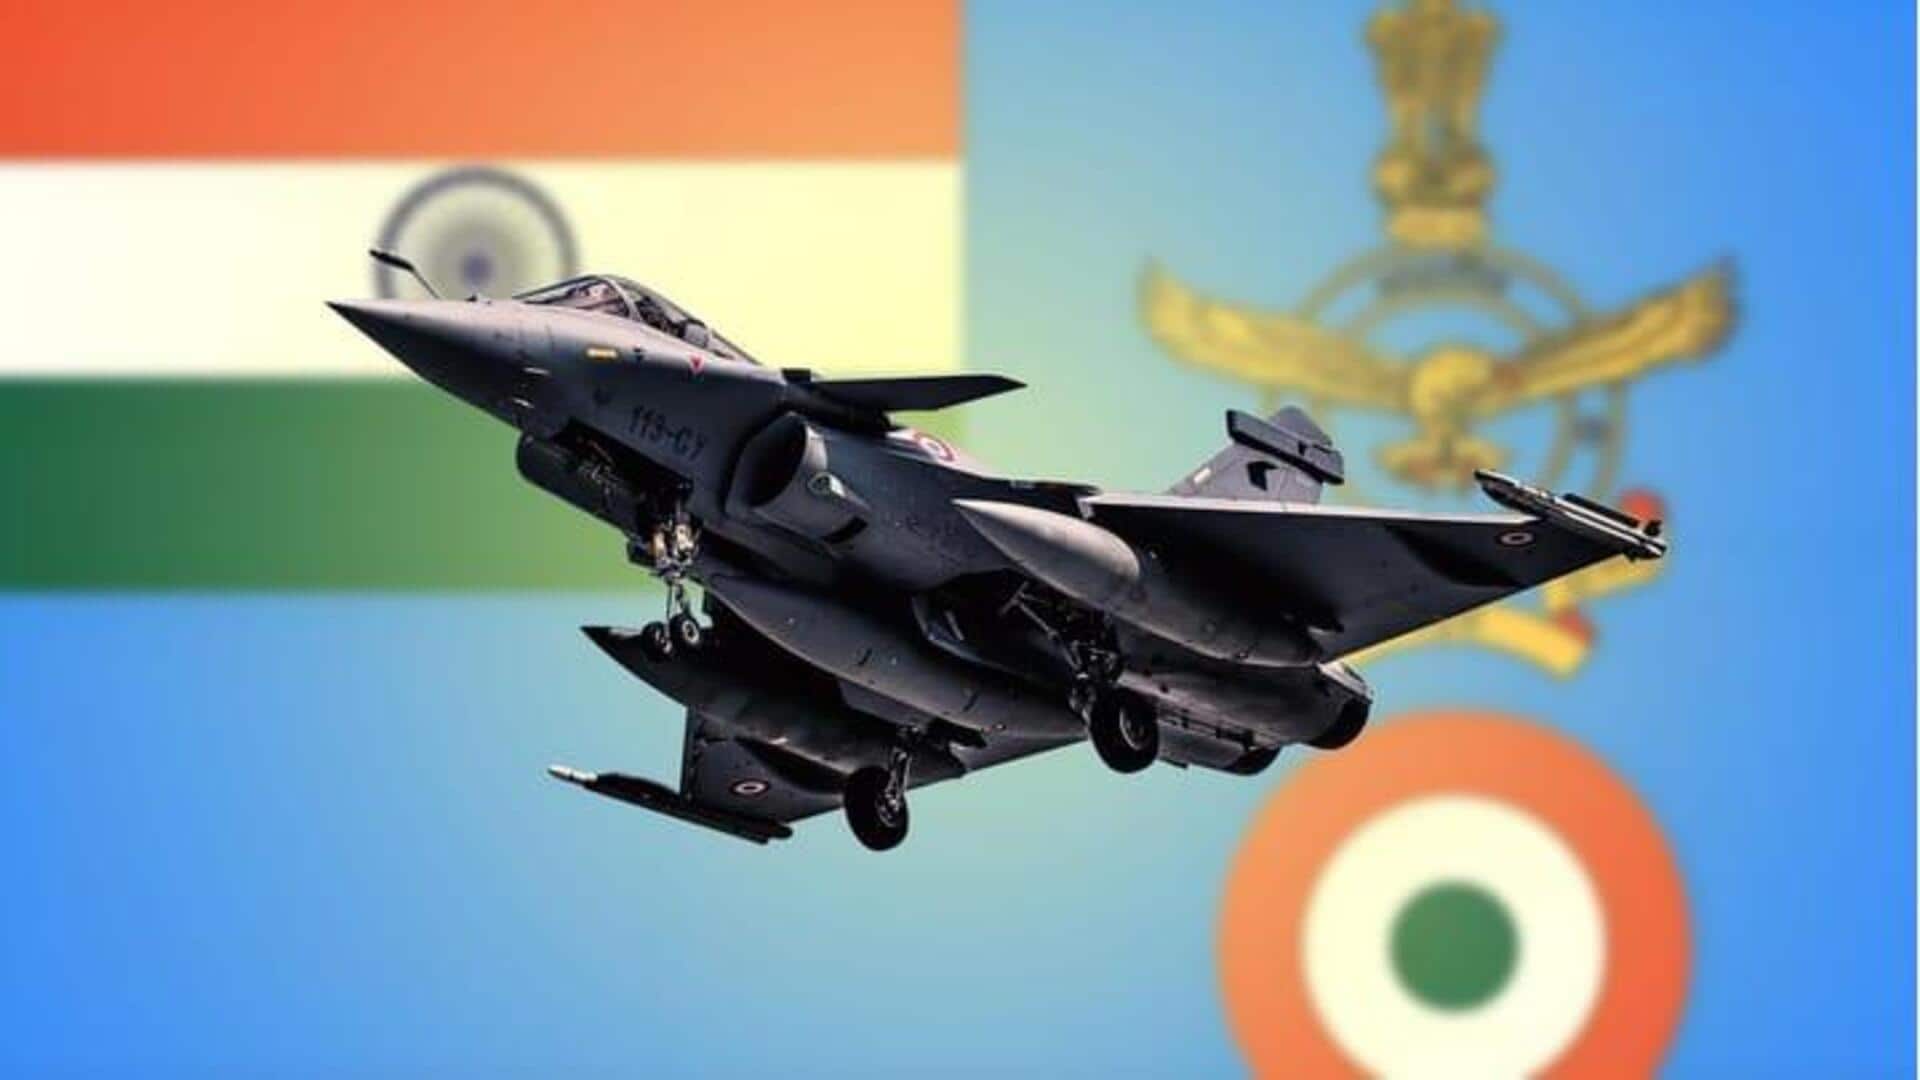 IAF new ensign: 72 ఏళ్ల తర్వాత కొత్త జెండాను ఆవిష్కరించిన భారత వైమానిక దళం